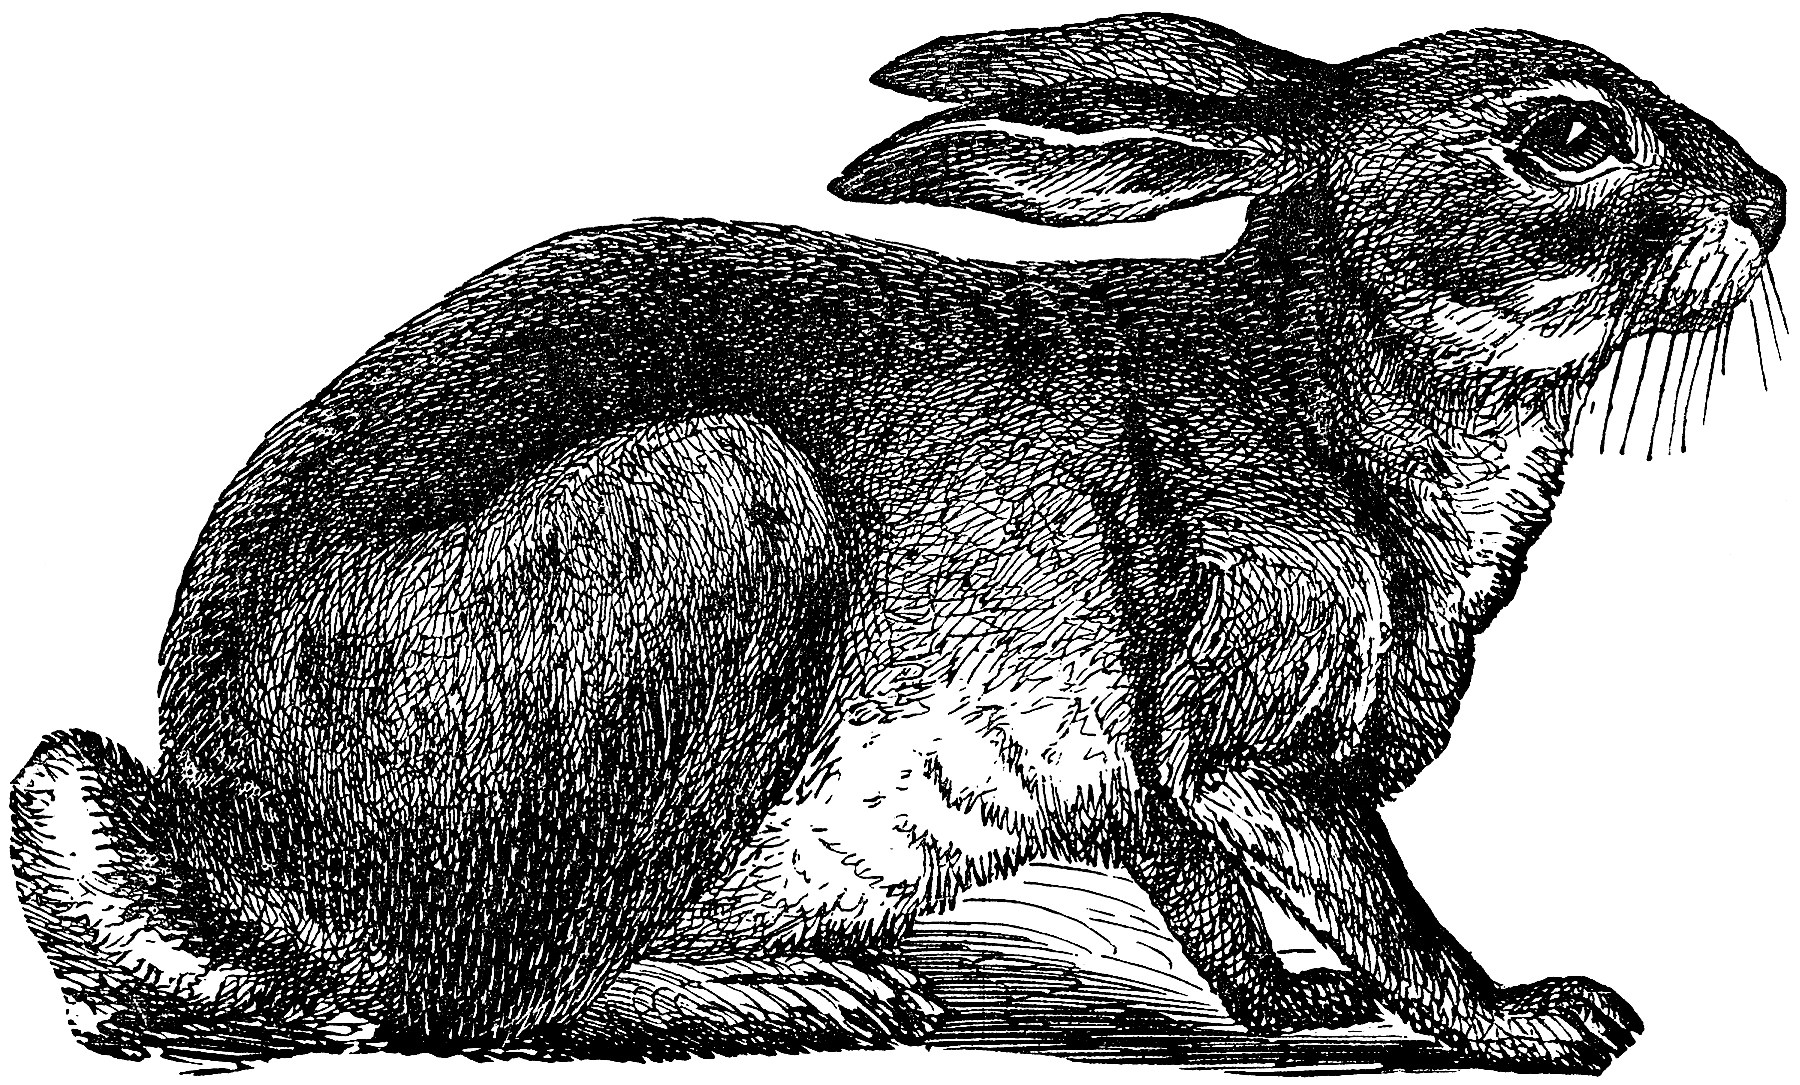 Public Domain Vintage Rabbit Illustration - Illustration of Many Recent